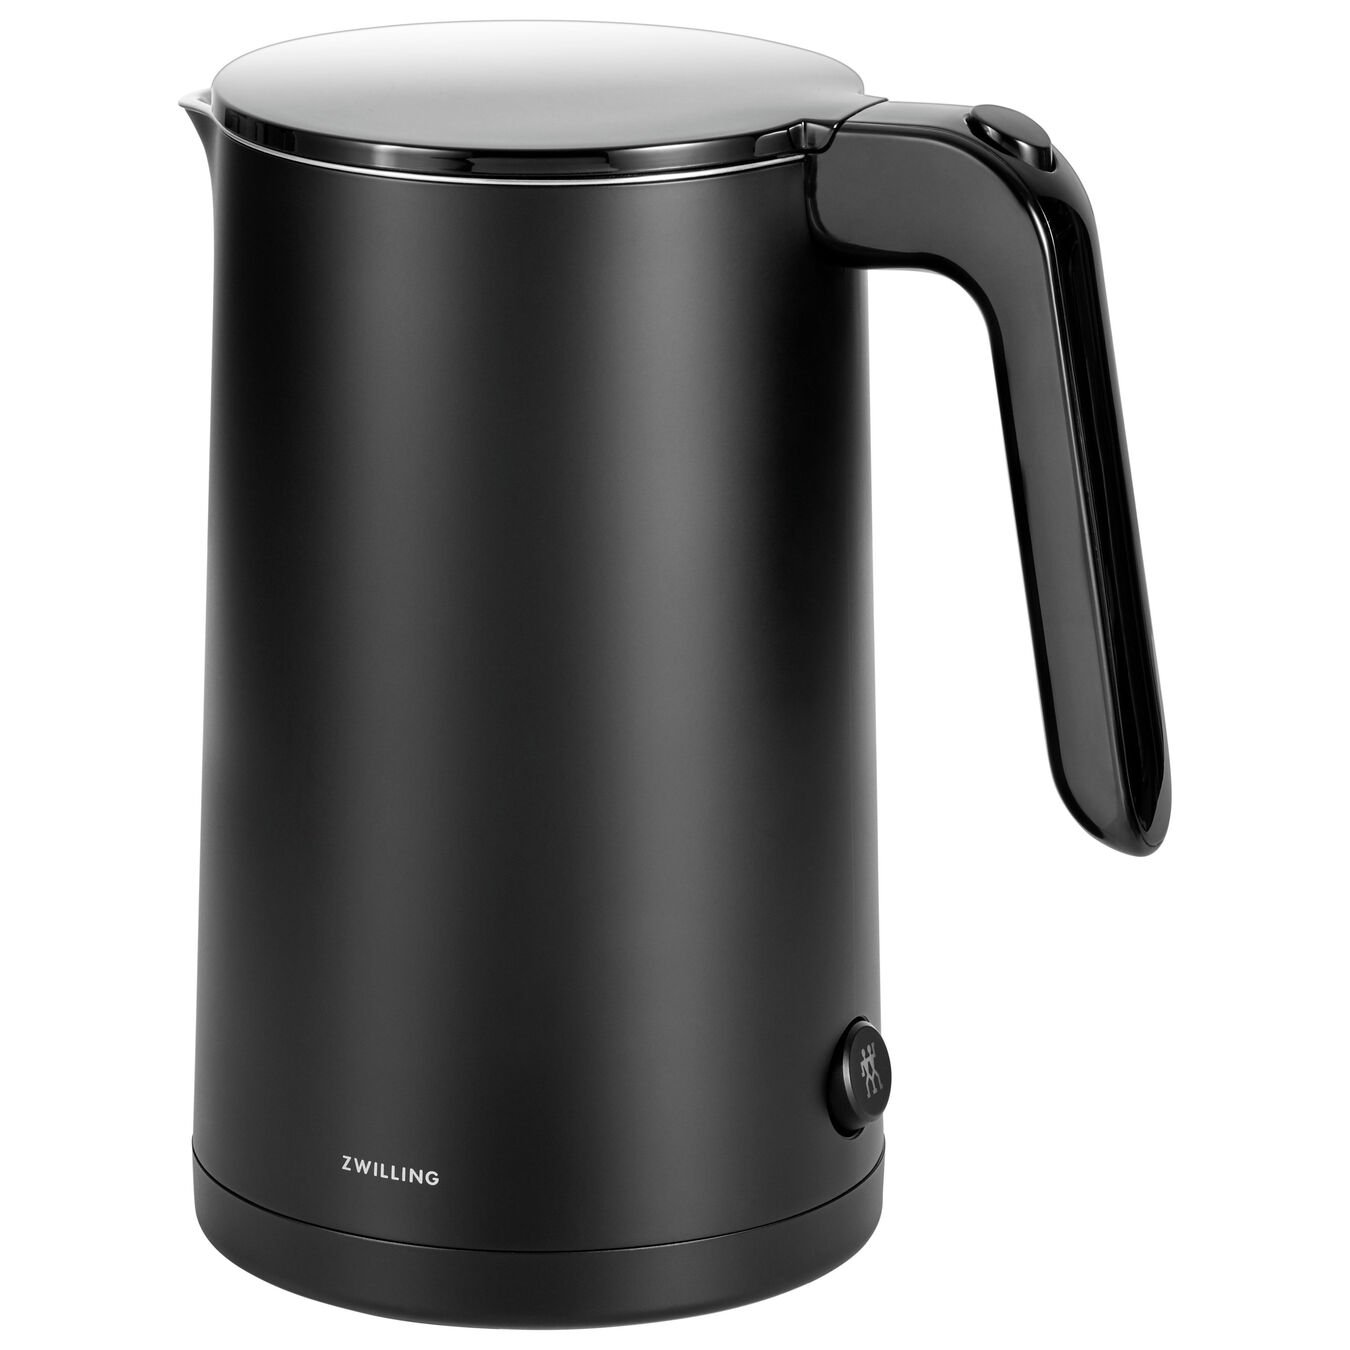 Electric kettle - black,,large 2